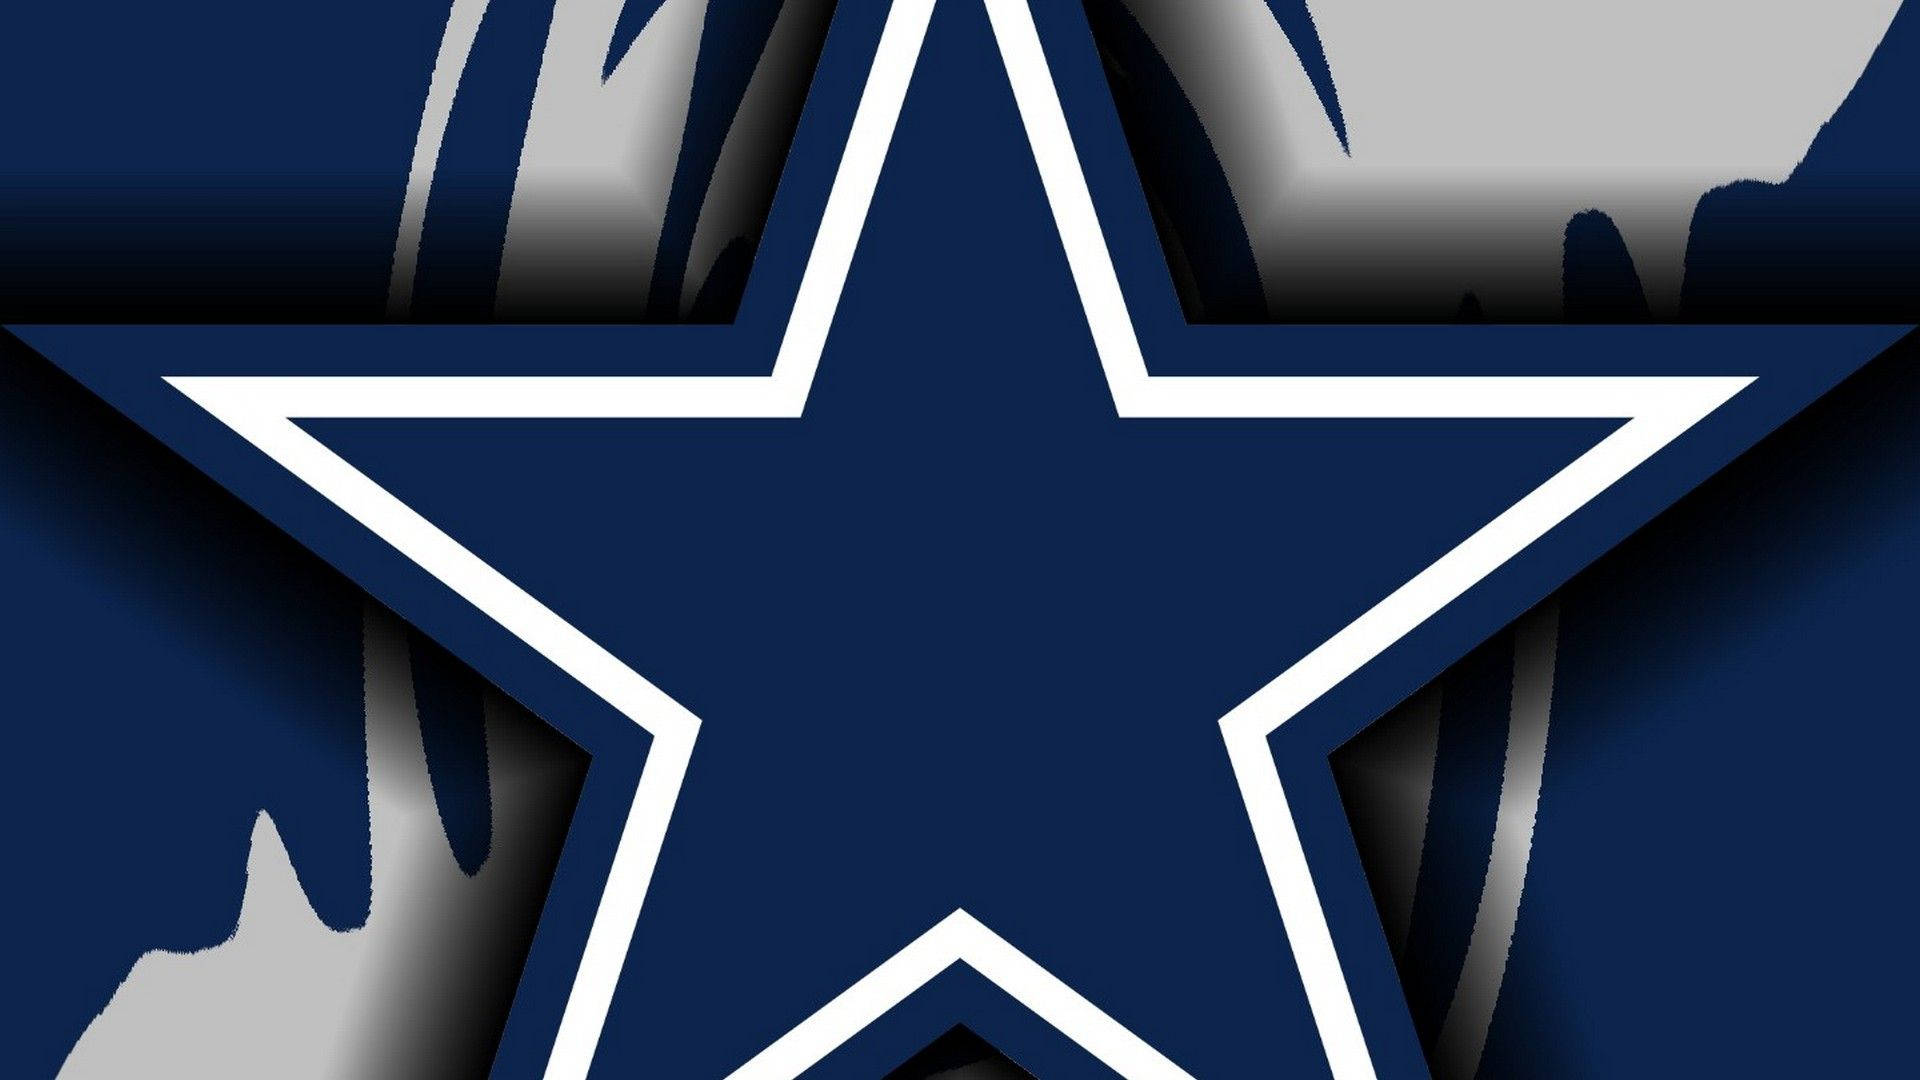 Dallas Cowboys Logo With Streaks Background